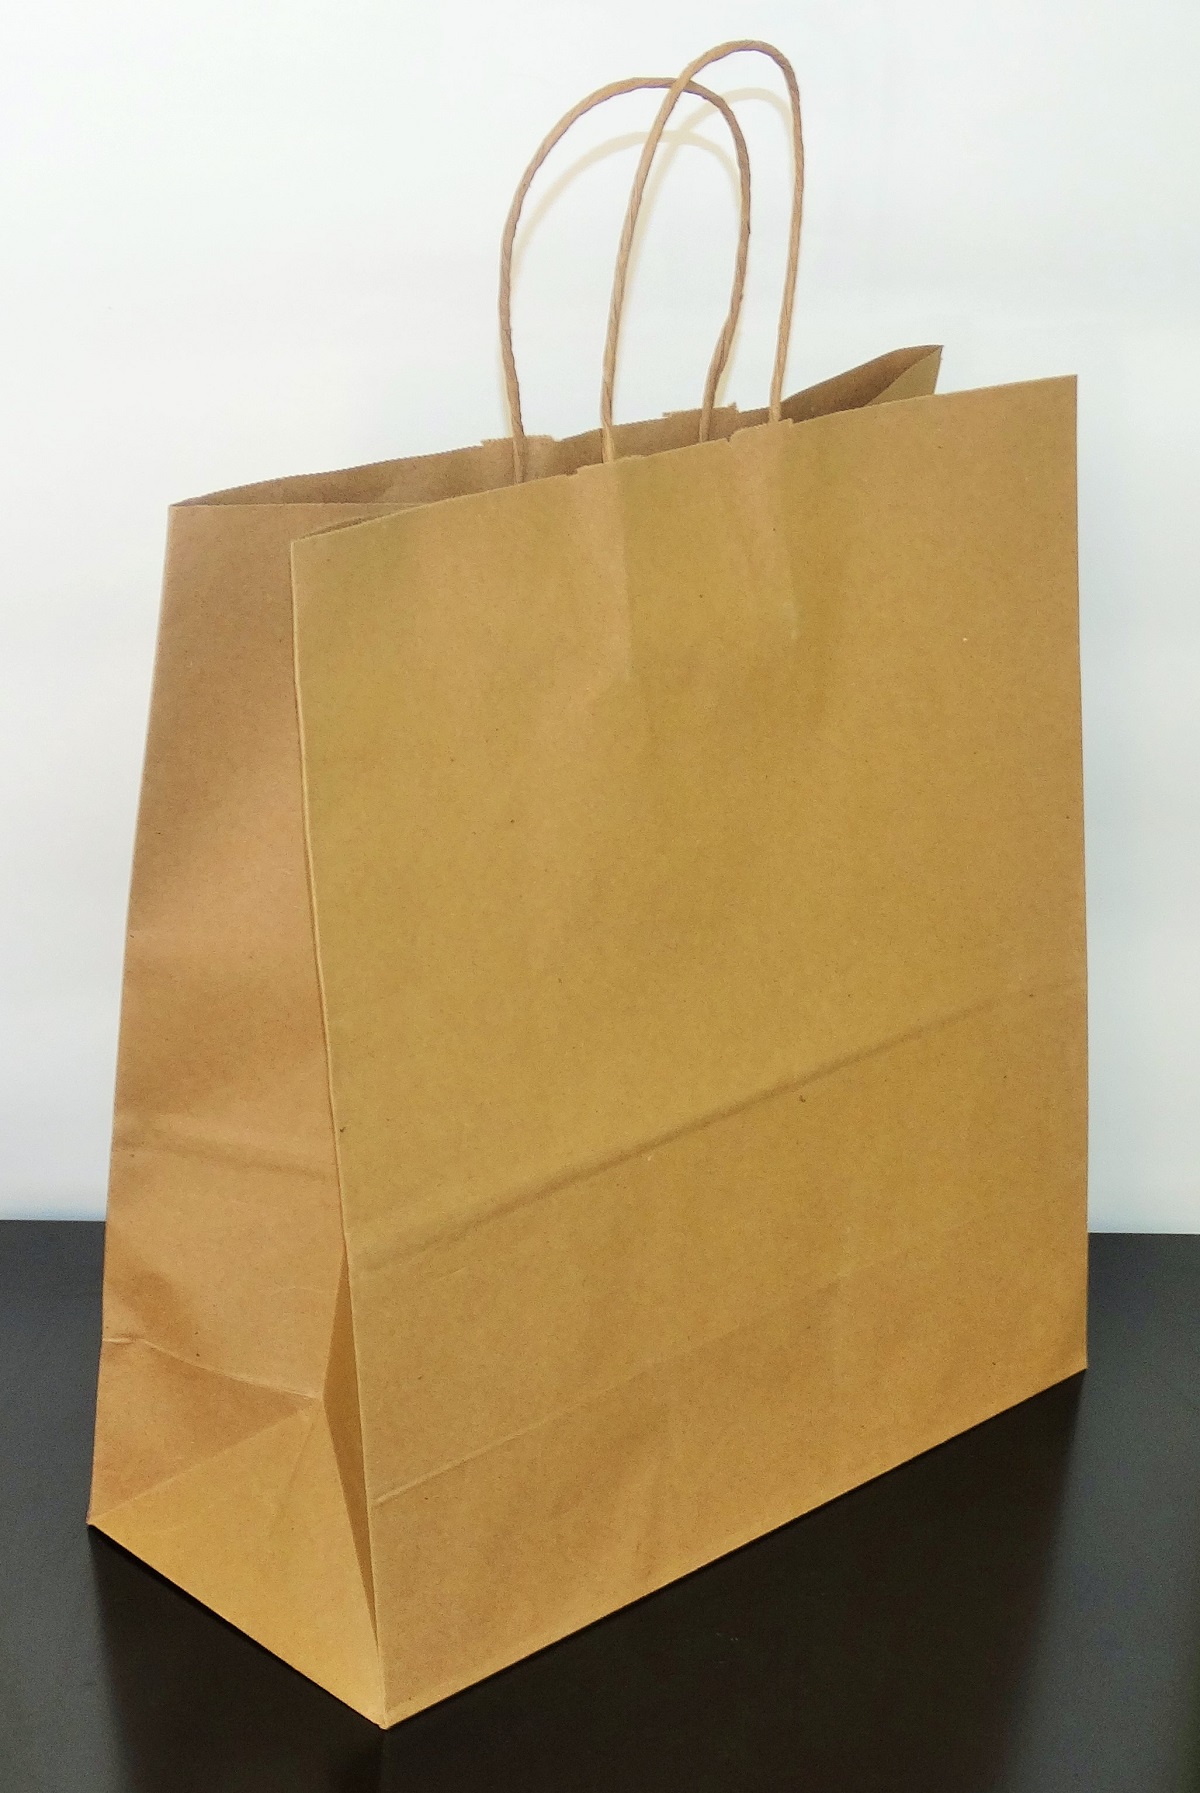 bolsa papel kraft - Buscar con Google  Hacer bolsas de papel, Bolsas de  papel, Sobres de papel